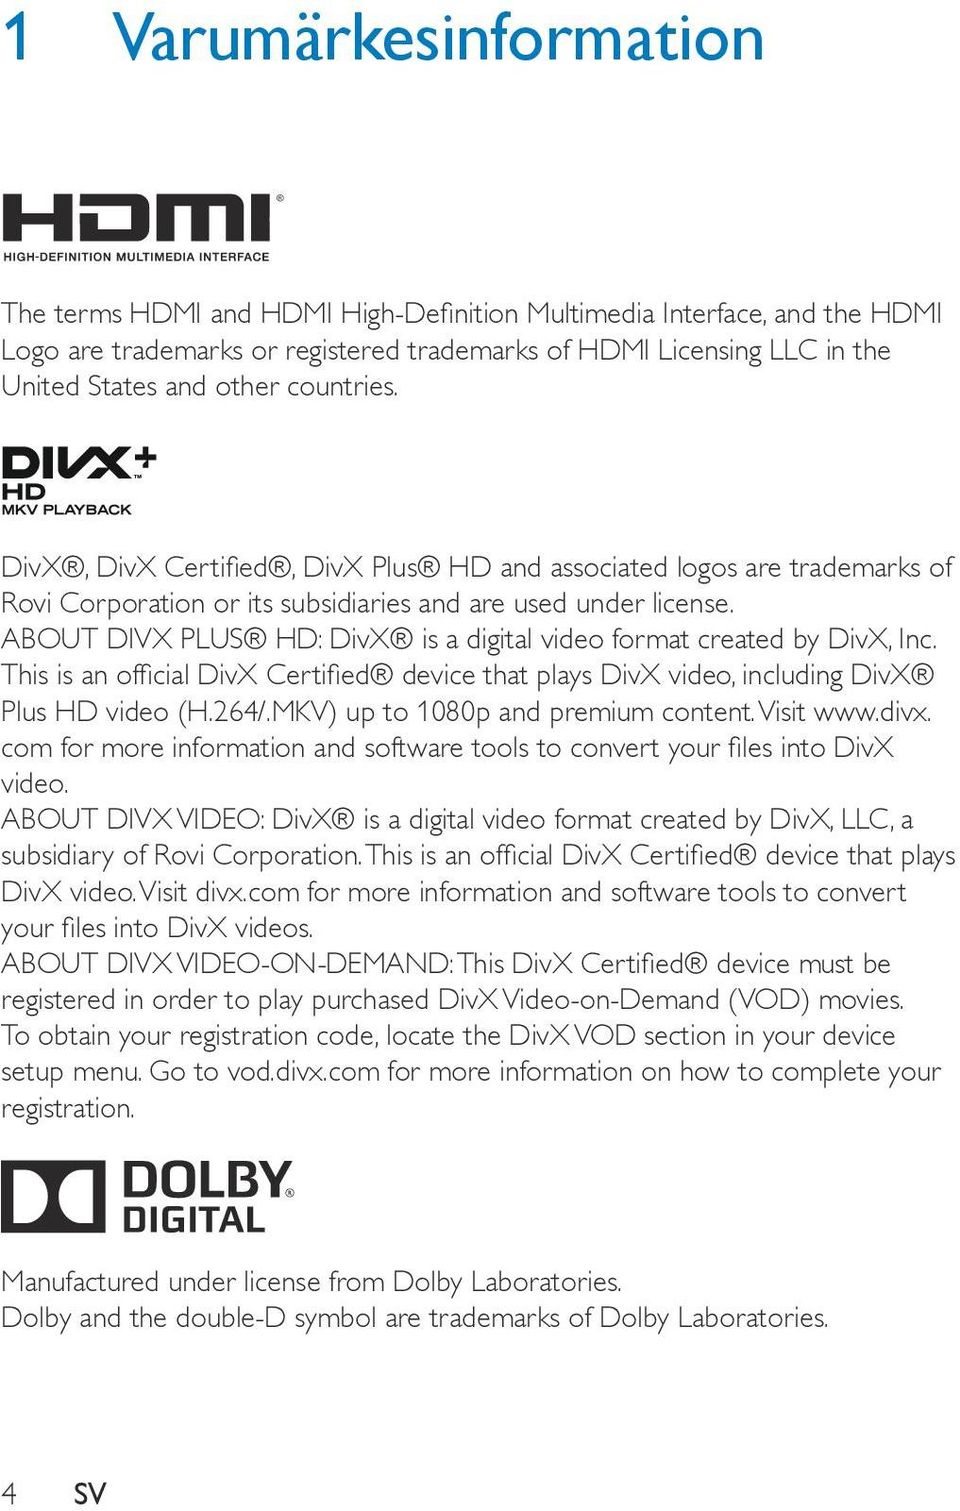 ABOUT DIVX PLUS HD: DivX is a digital video format created by DivX, Inc. This is an official DivX Certified device that plays DivX video, including DivX Plus HD video (H.264/.